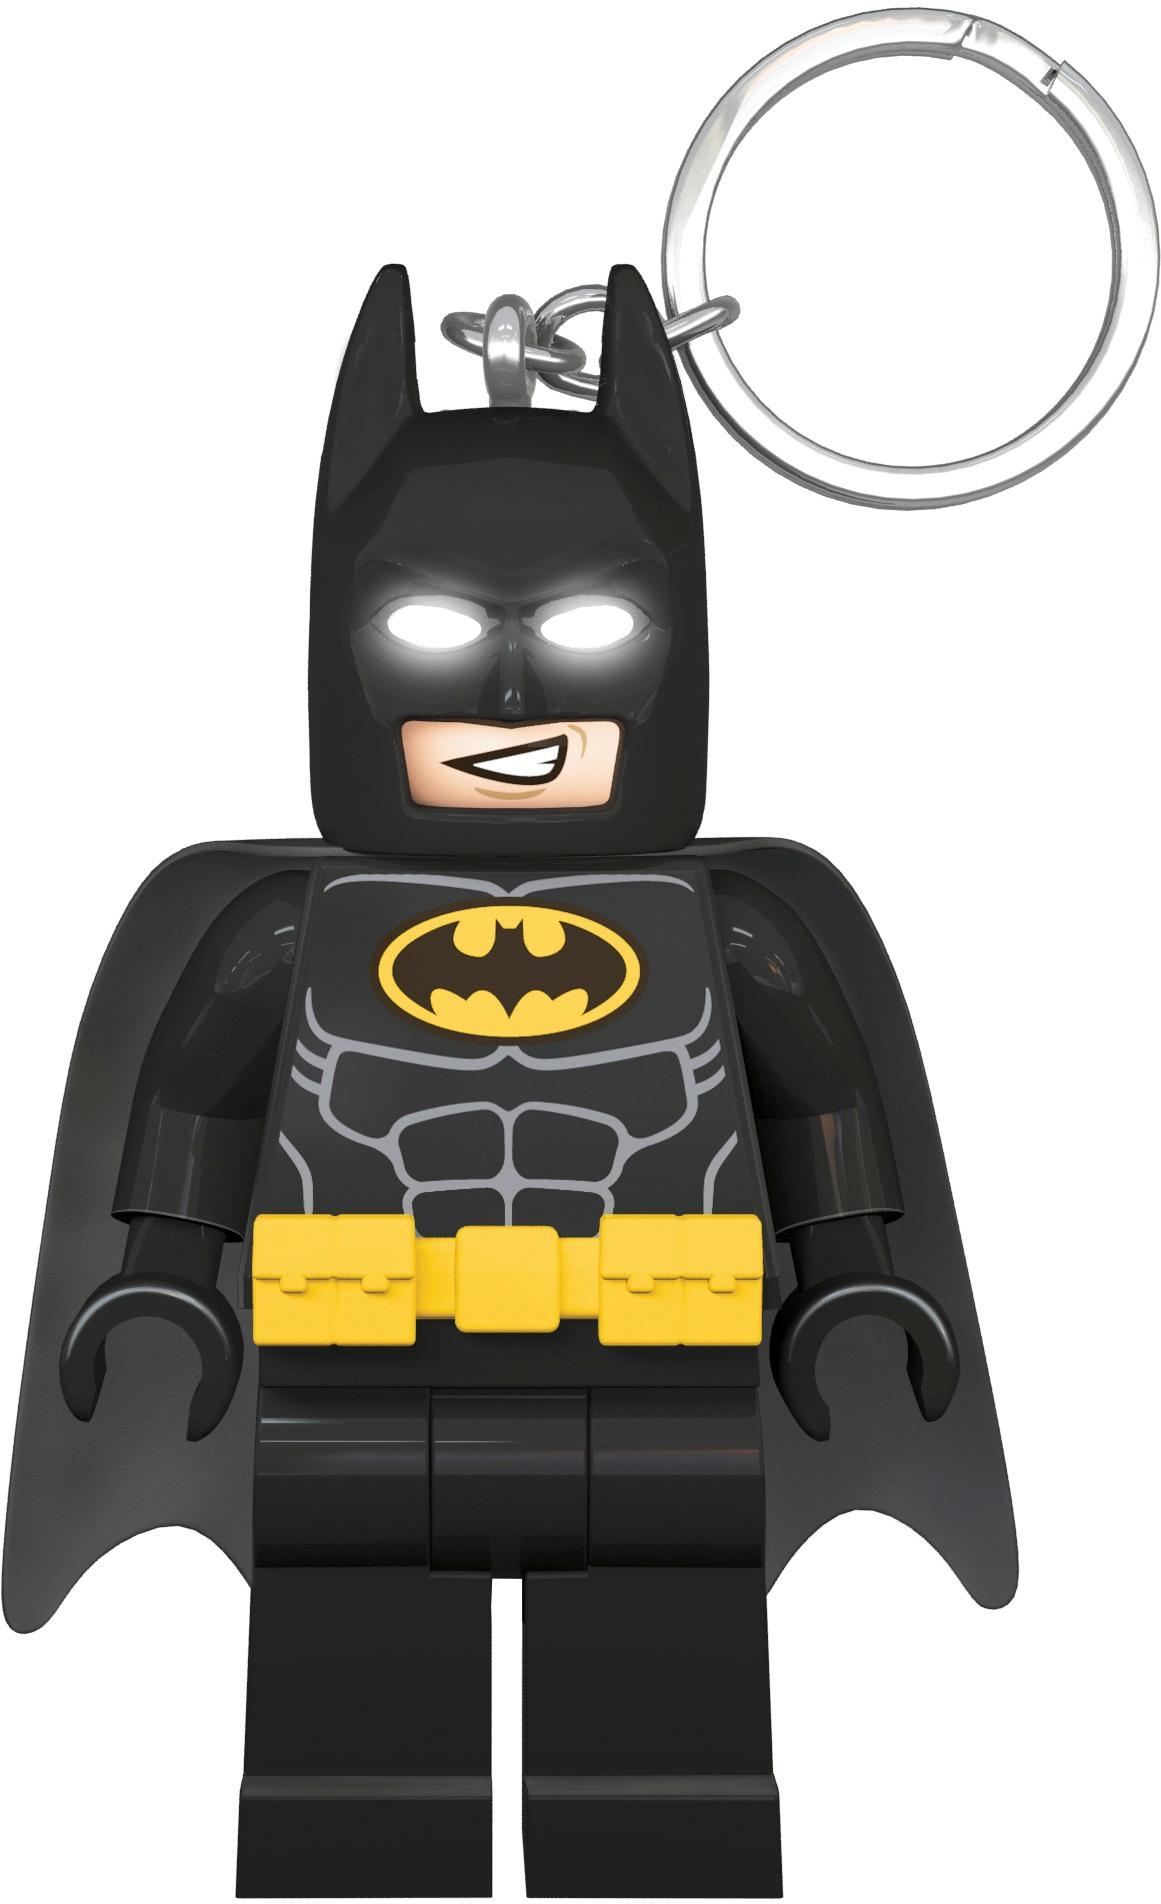 LEGO The LEGO Movie 2 Key Light, Batman